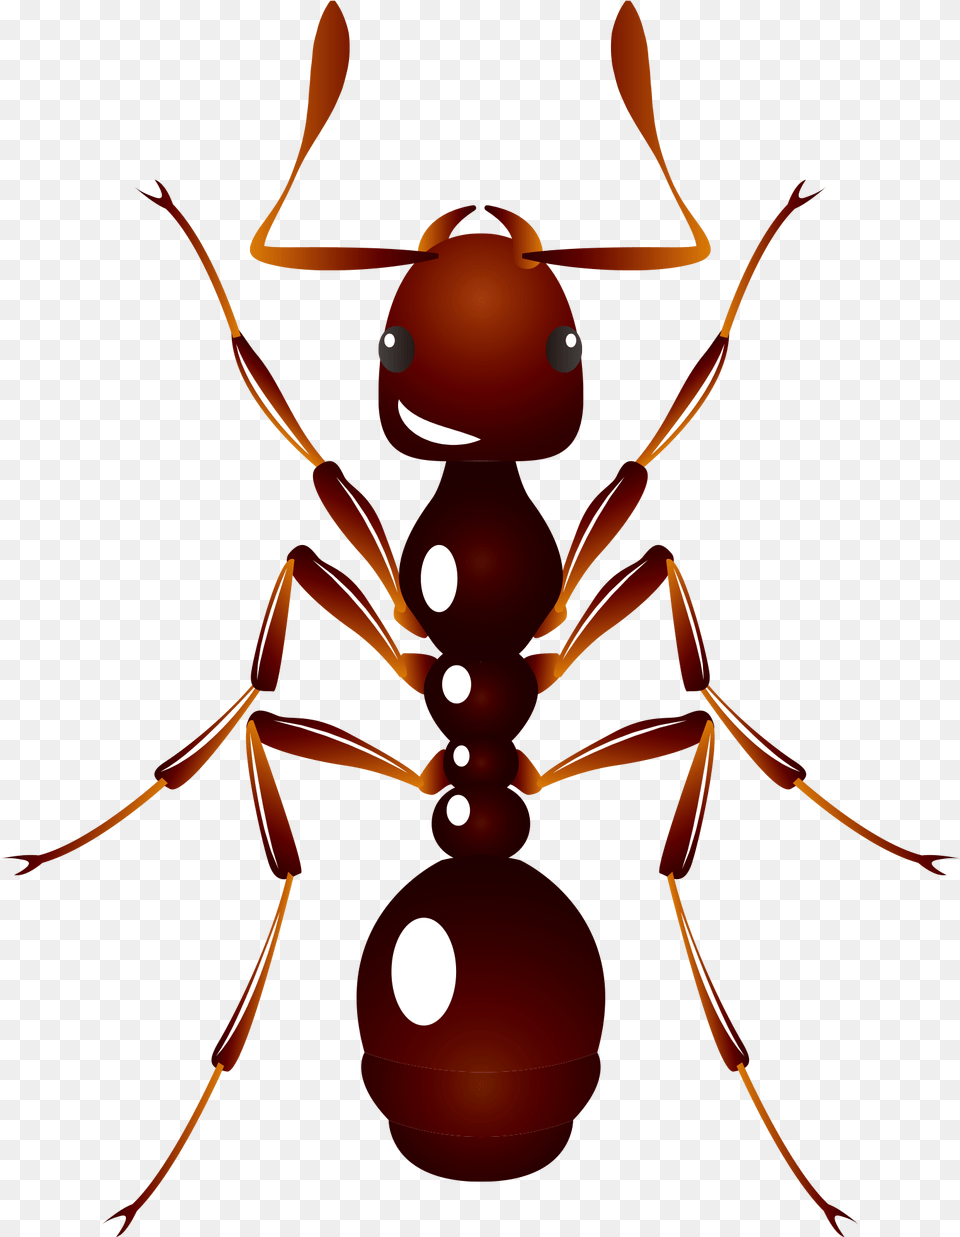 Ant U6606u866b U8682u8681 Insect Ants Vector, Animal, Invertebrate, Chandelier, Lamp Free Png